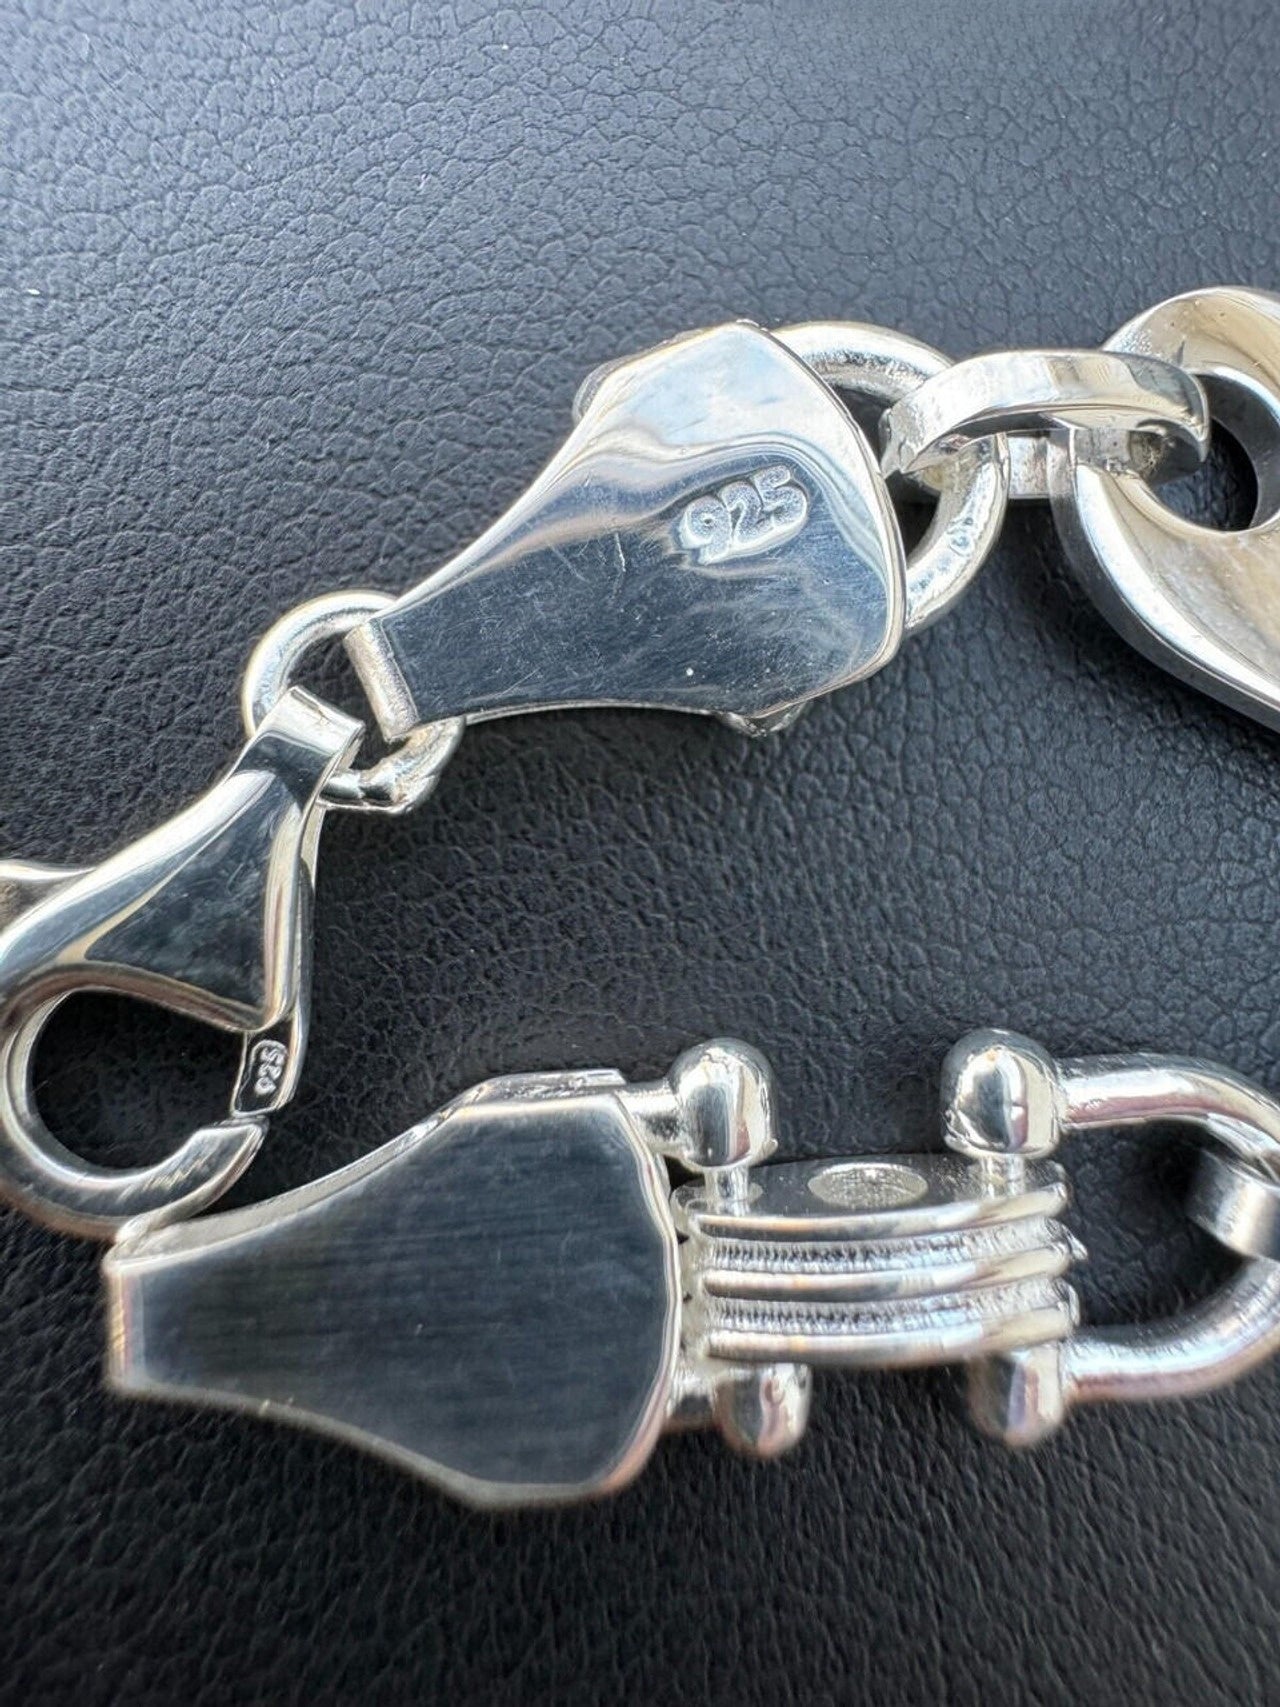 Mariner Link Chain 925 Sterling Silver Ferragamo Necklace 10mm